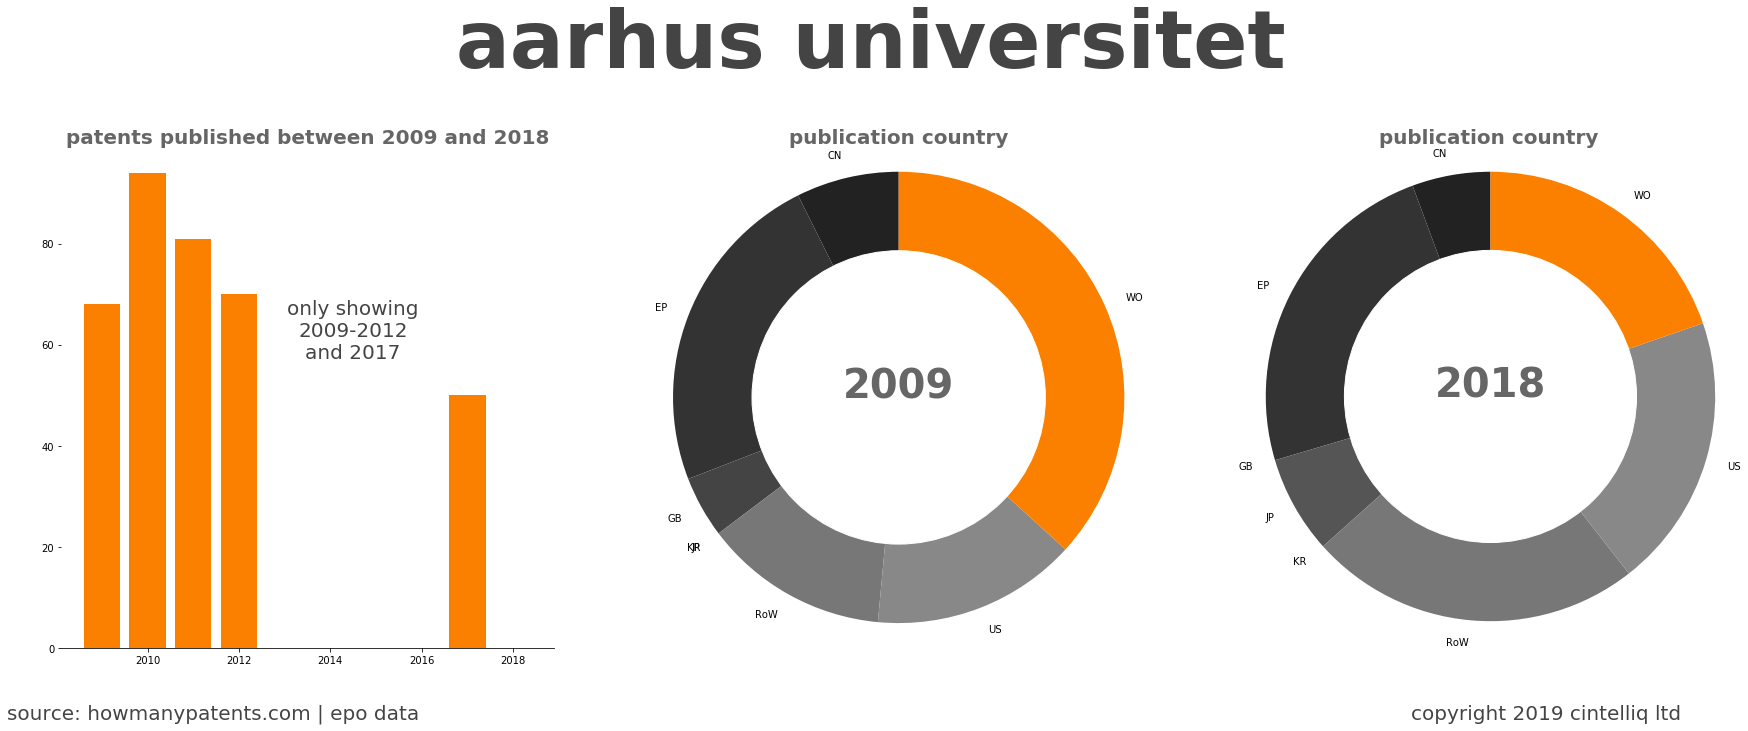 summary of patents for Aarhus Universitet